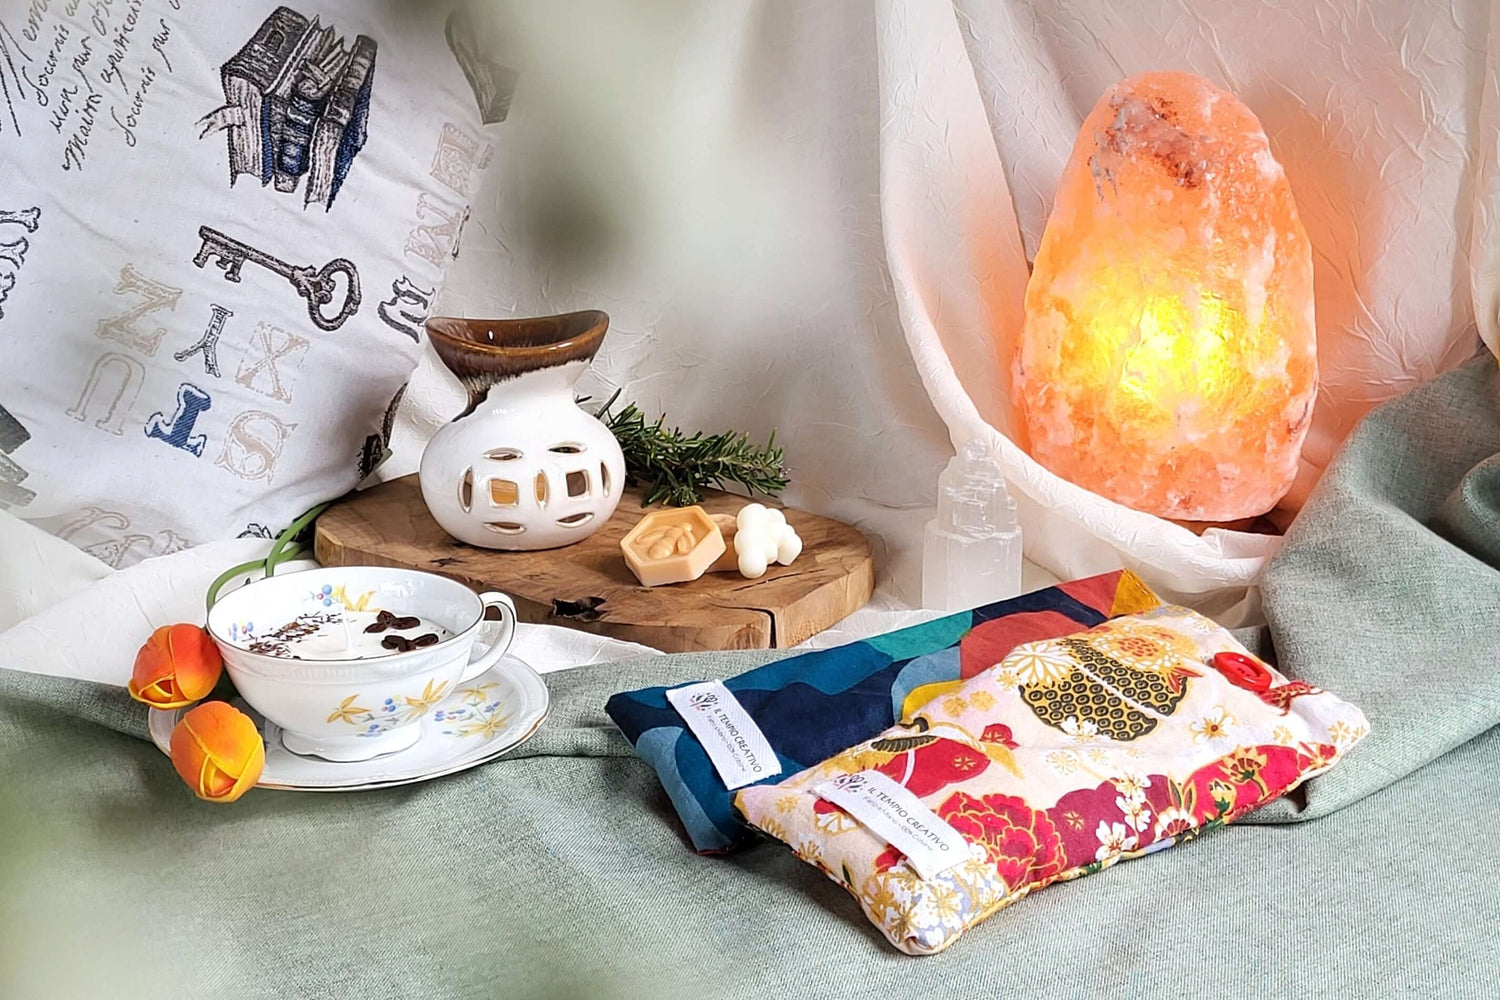 Background candele e cuscini con lampada di sale